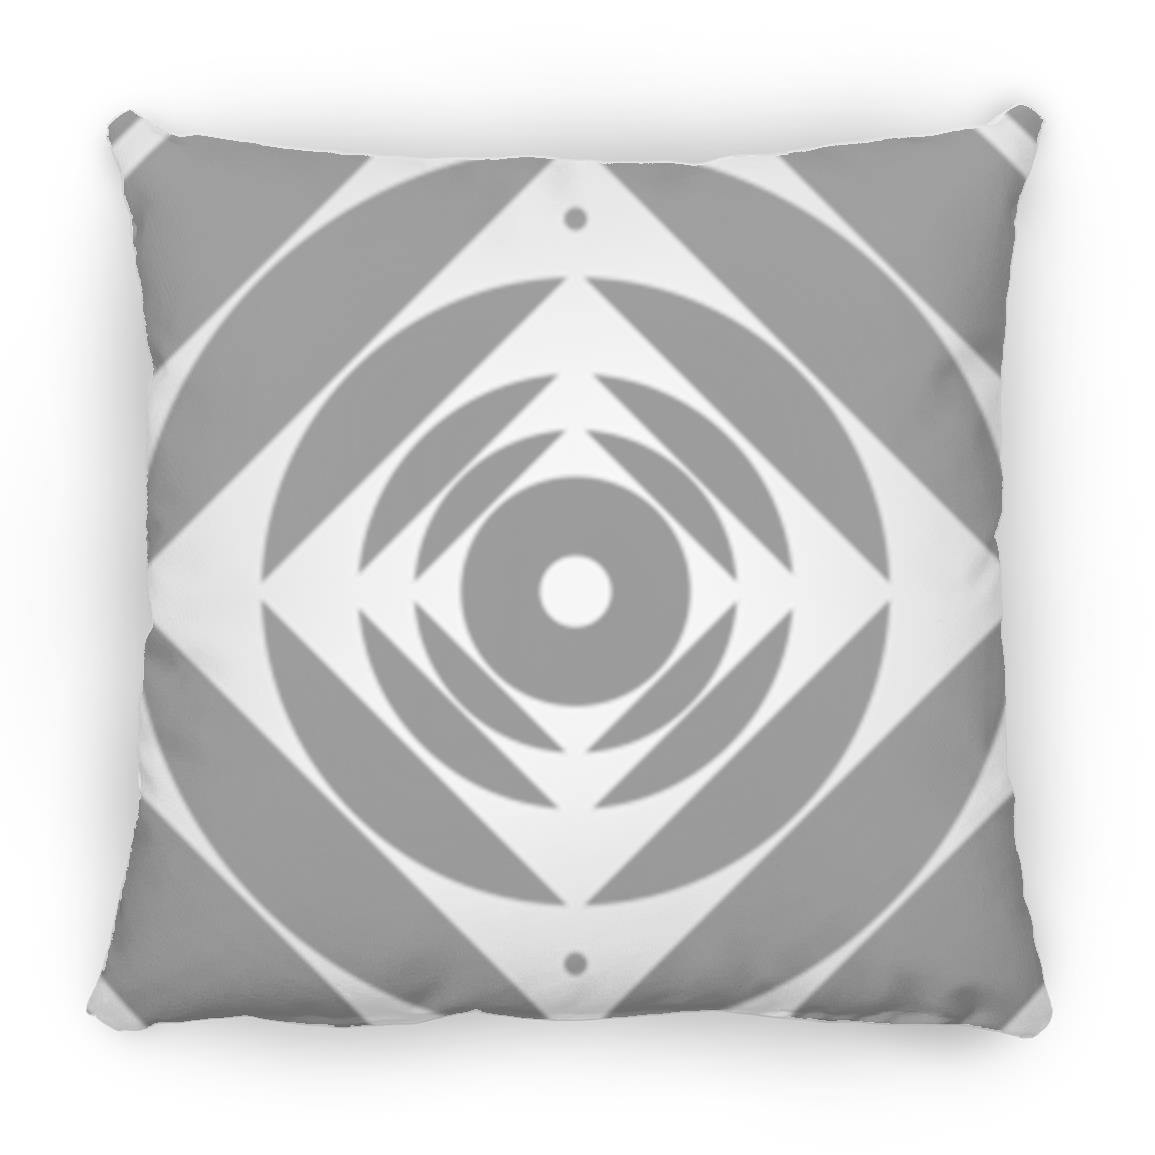 Crop Circle Pillow - Stonehenge - Shapes of Wisdom